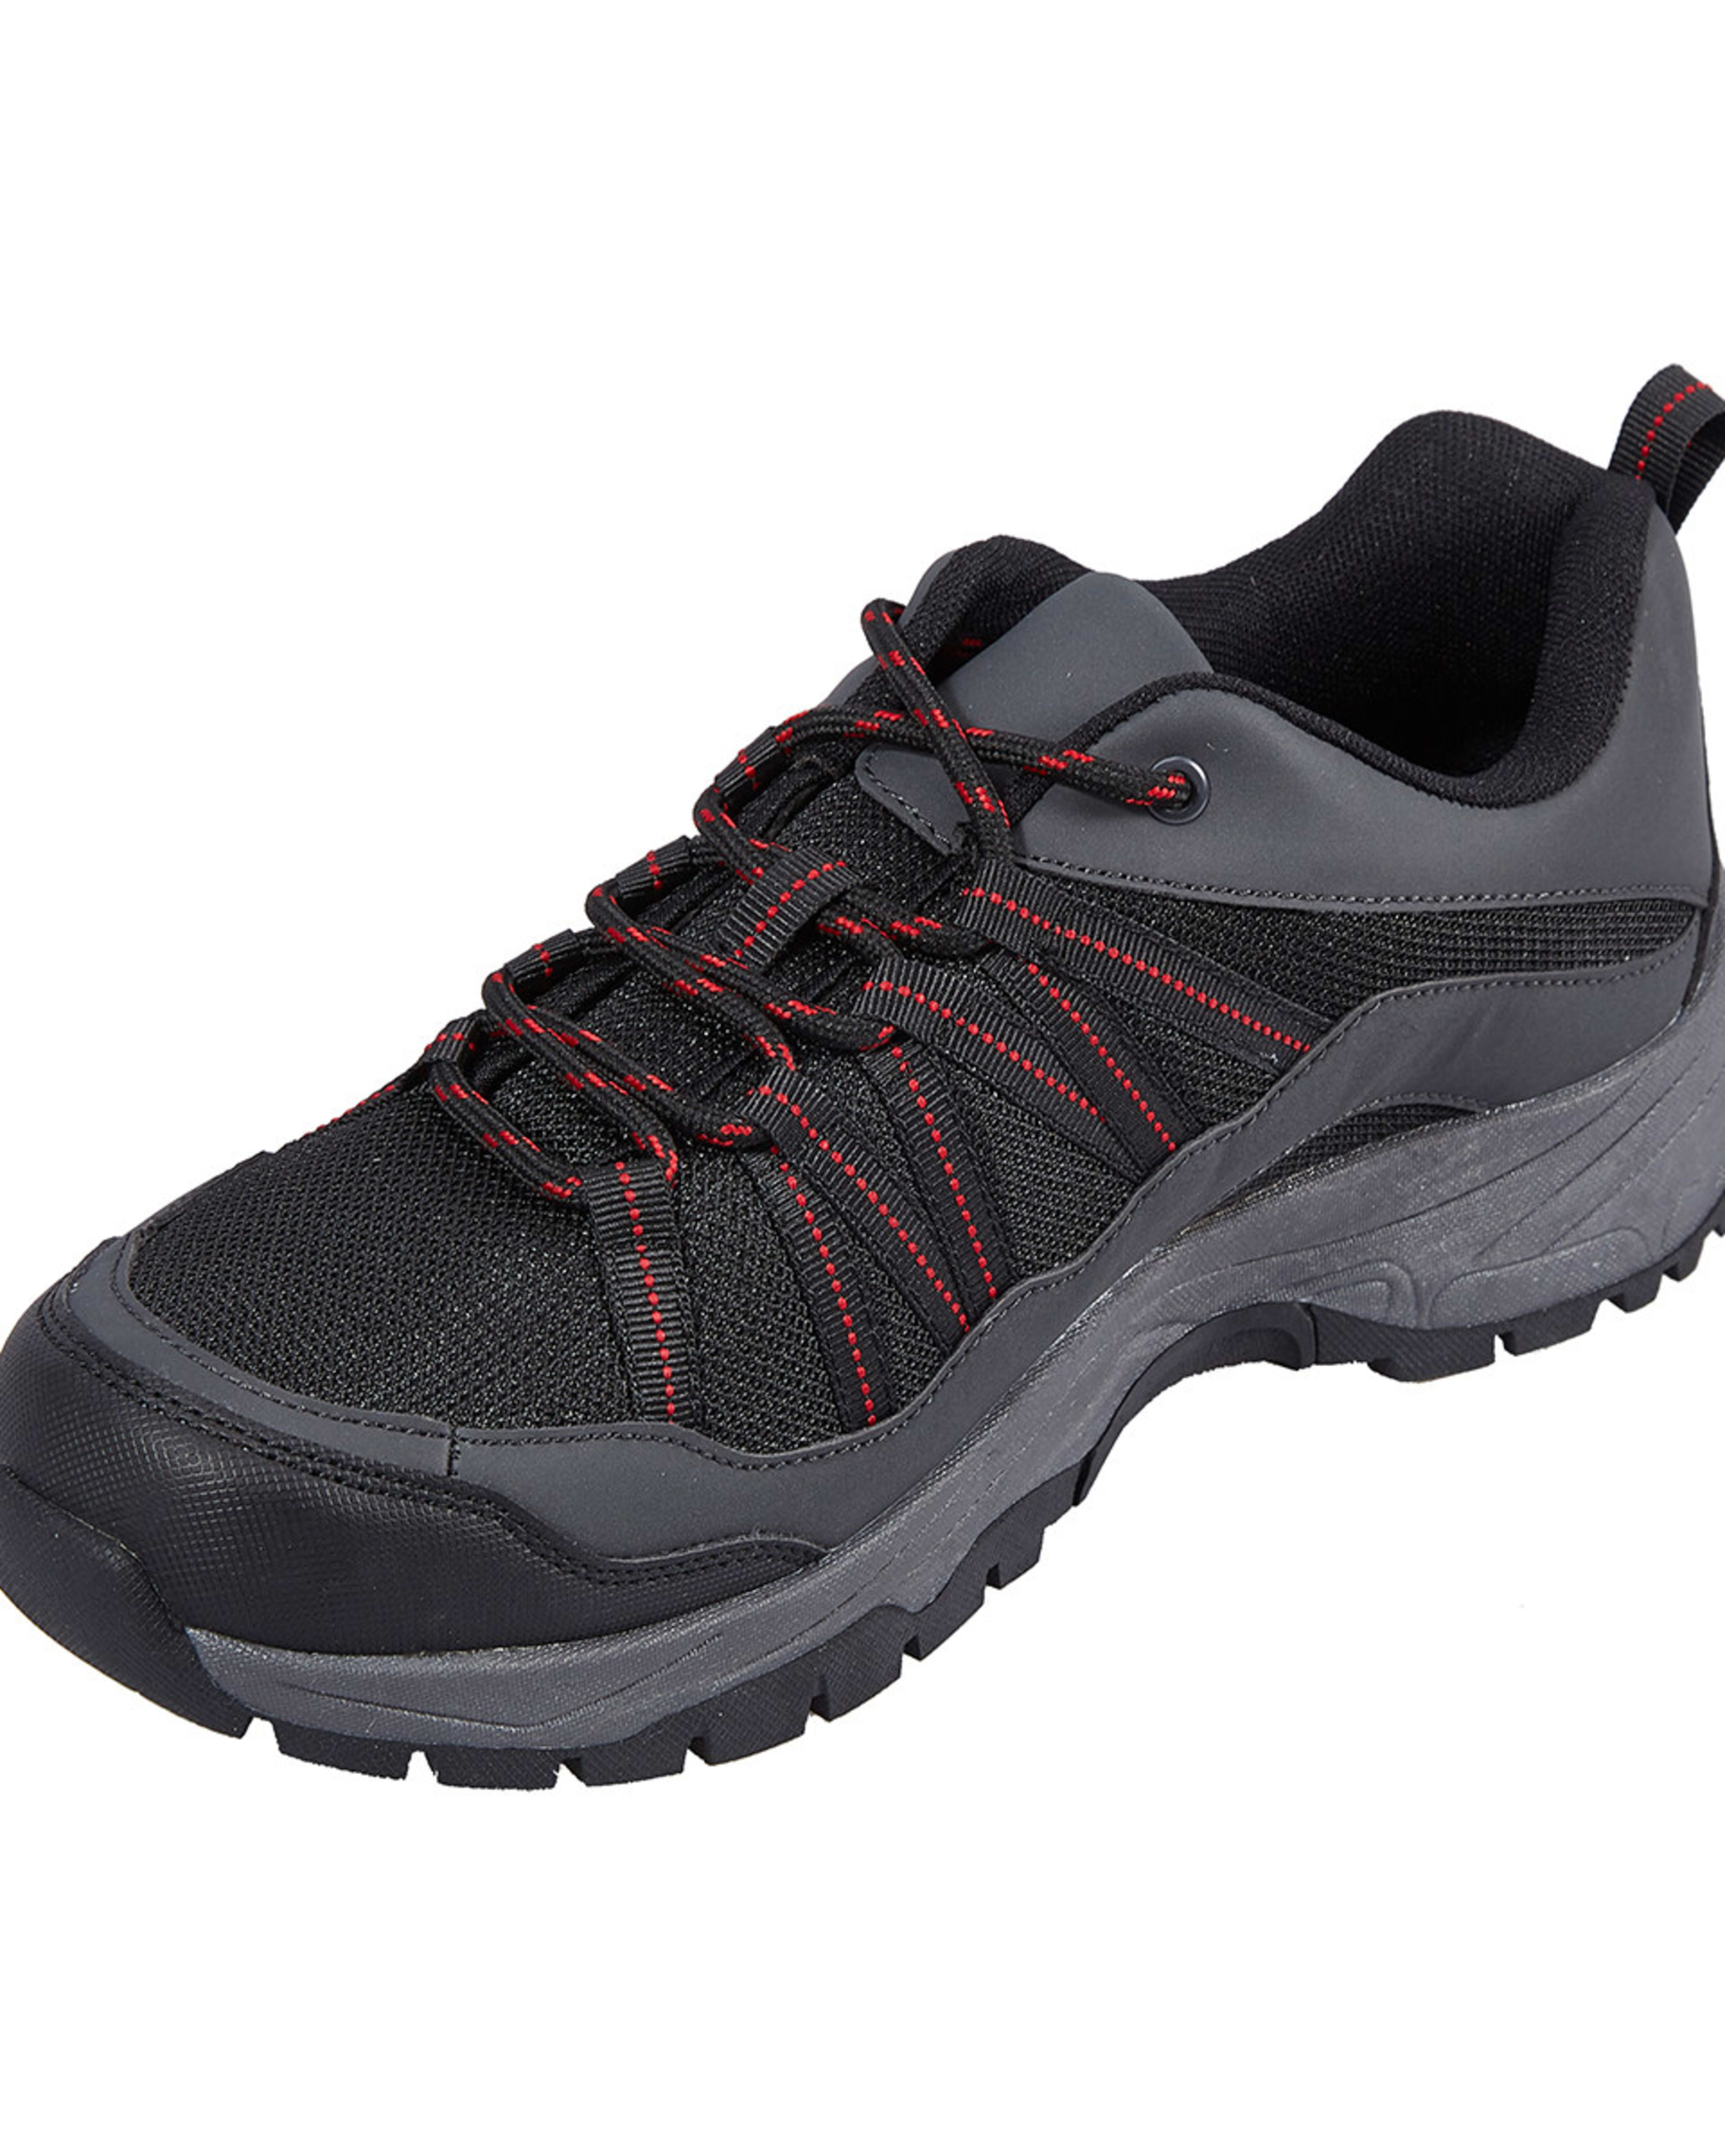 Active Lightweight Hiking Boots - Kmart